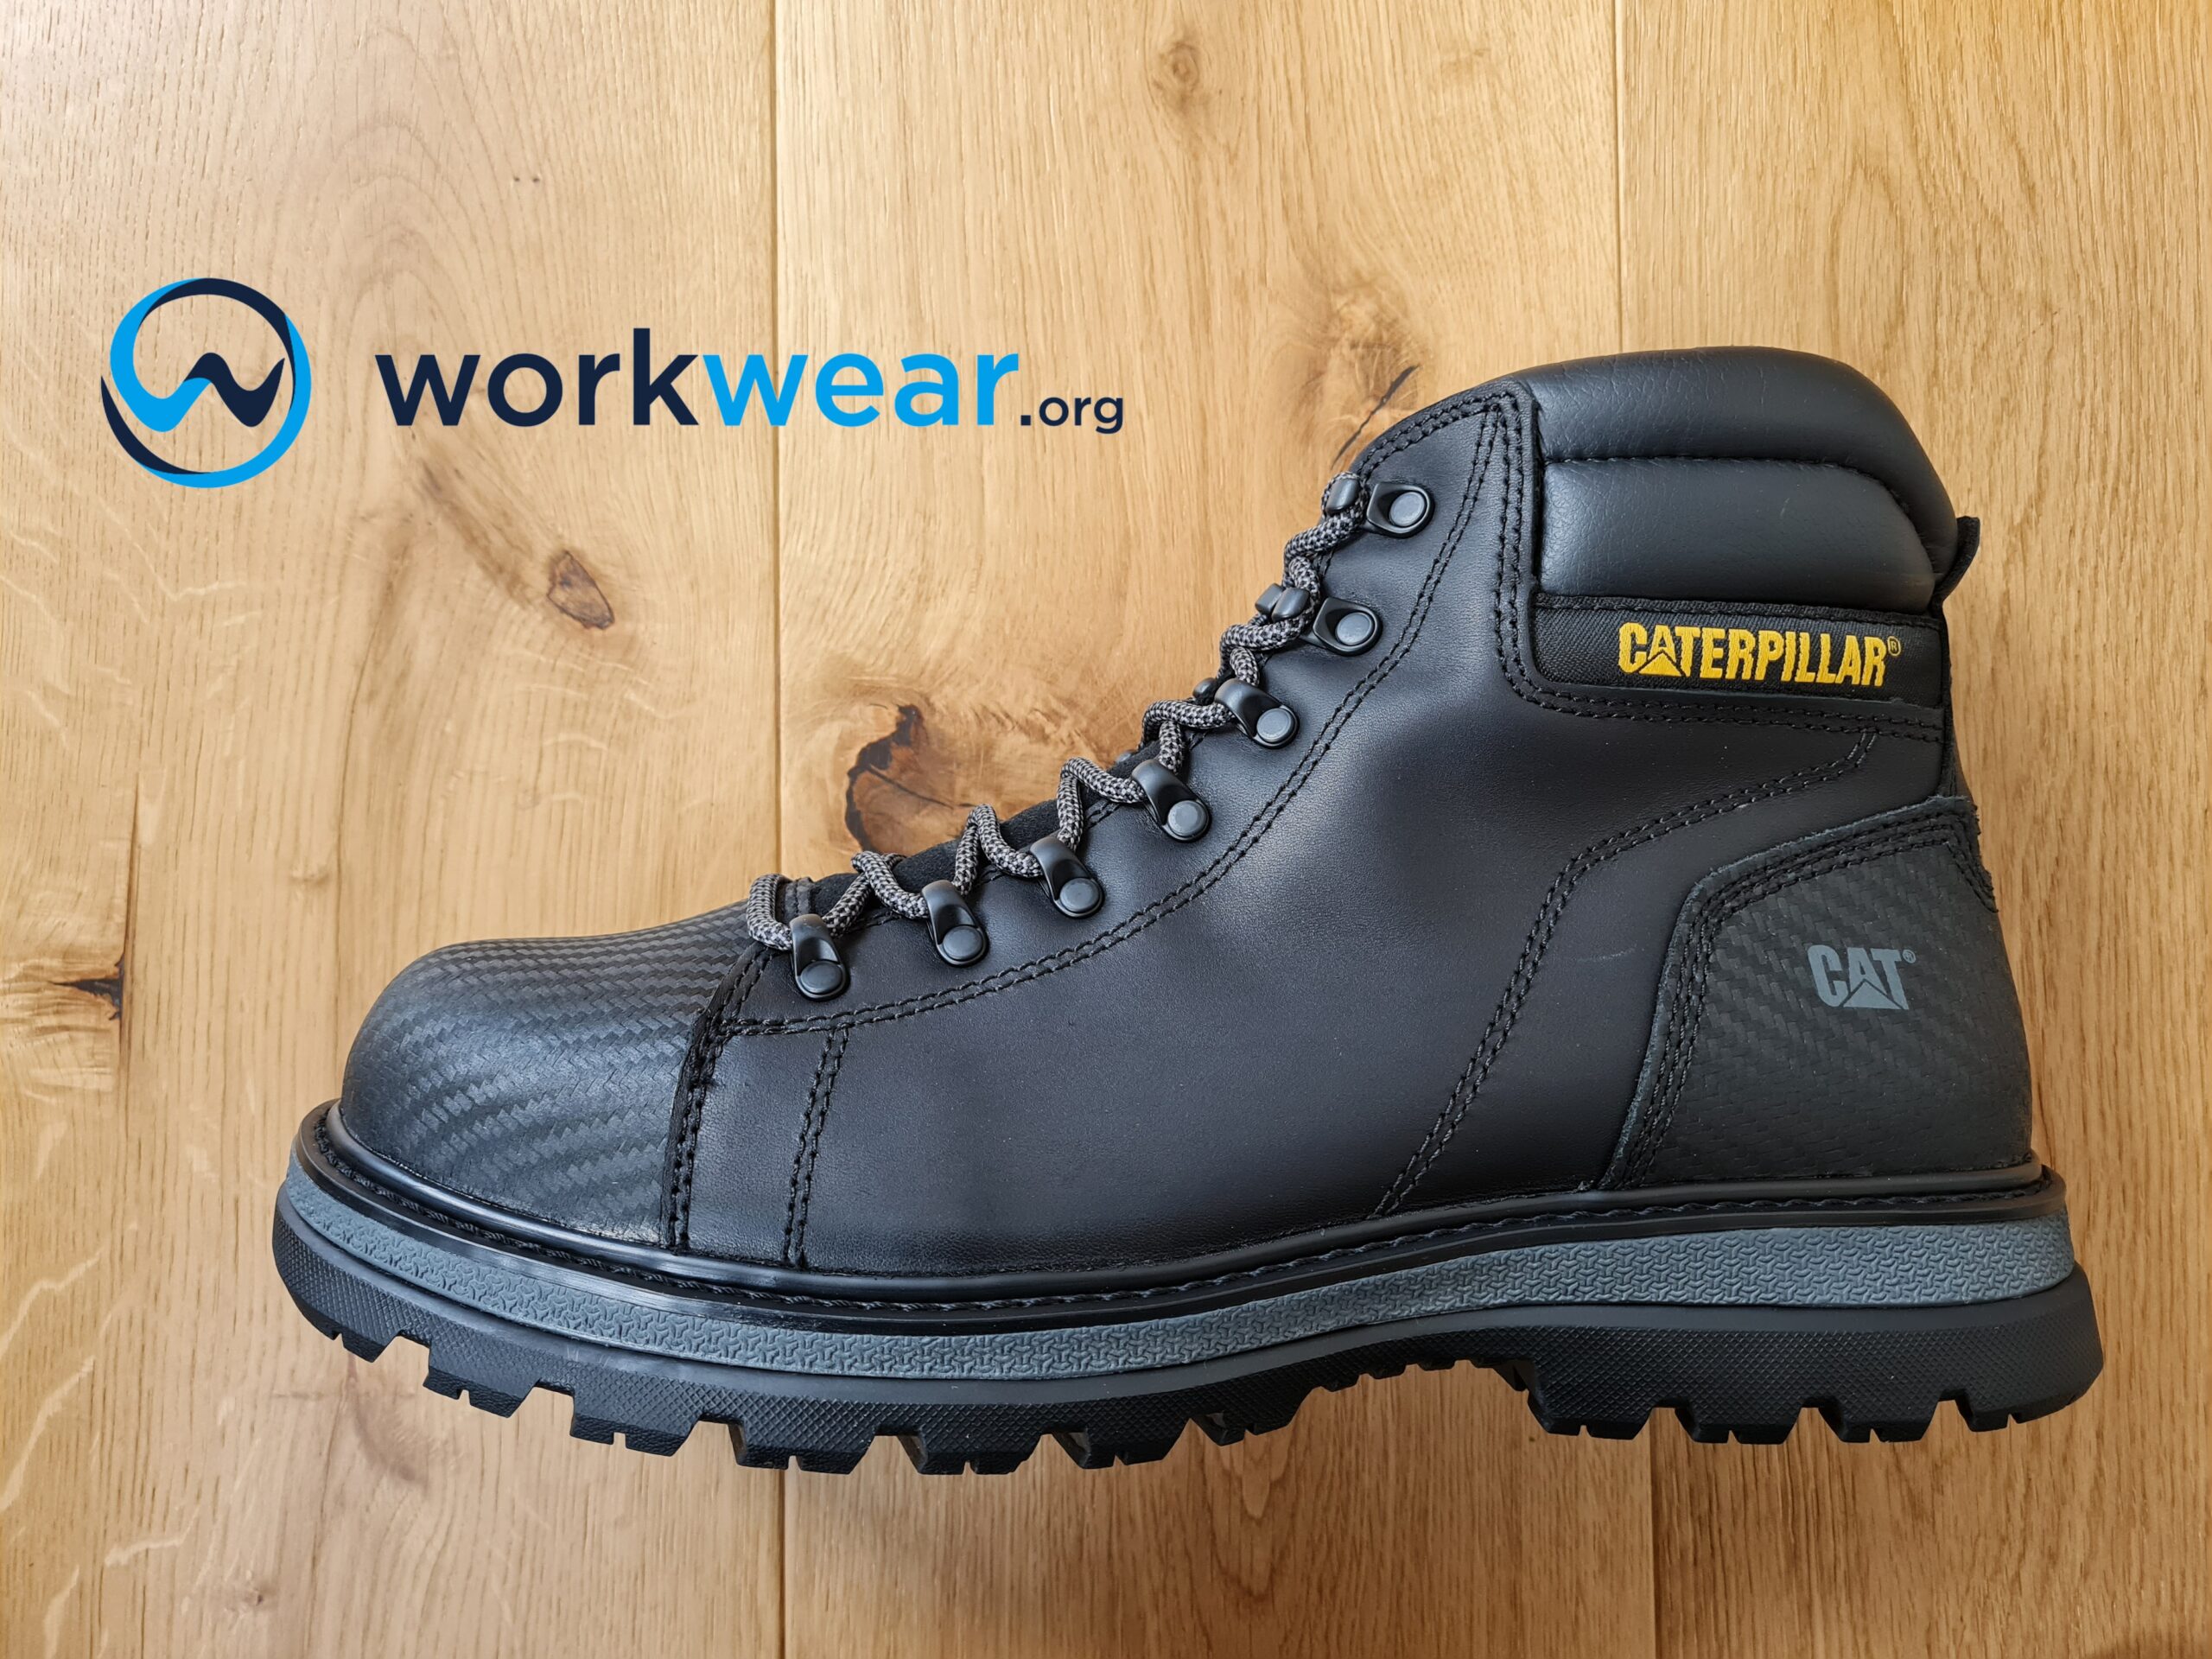 Caterpillar Men’s Foxfield Steel Toe Boot – Detailed Review | WorkWear.org